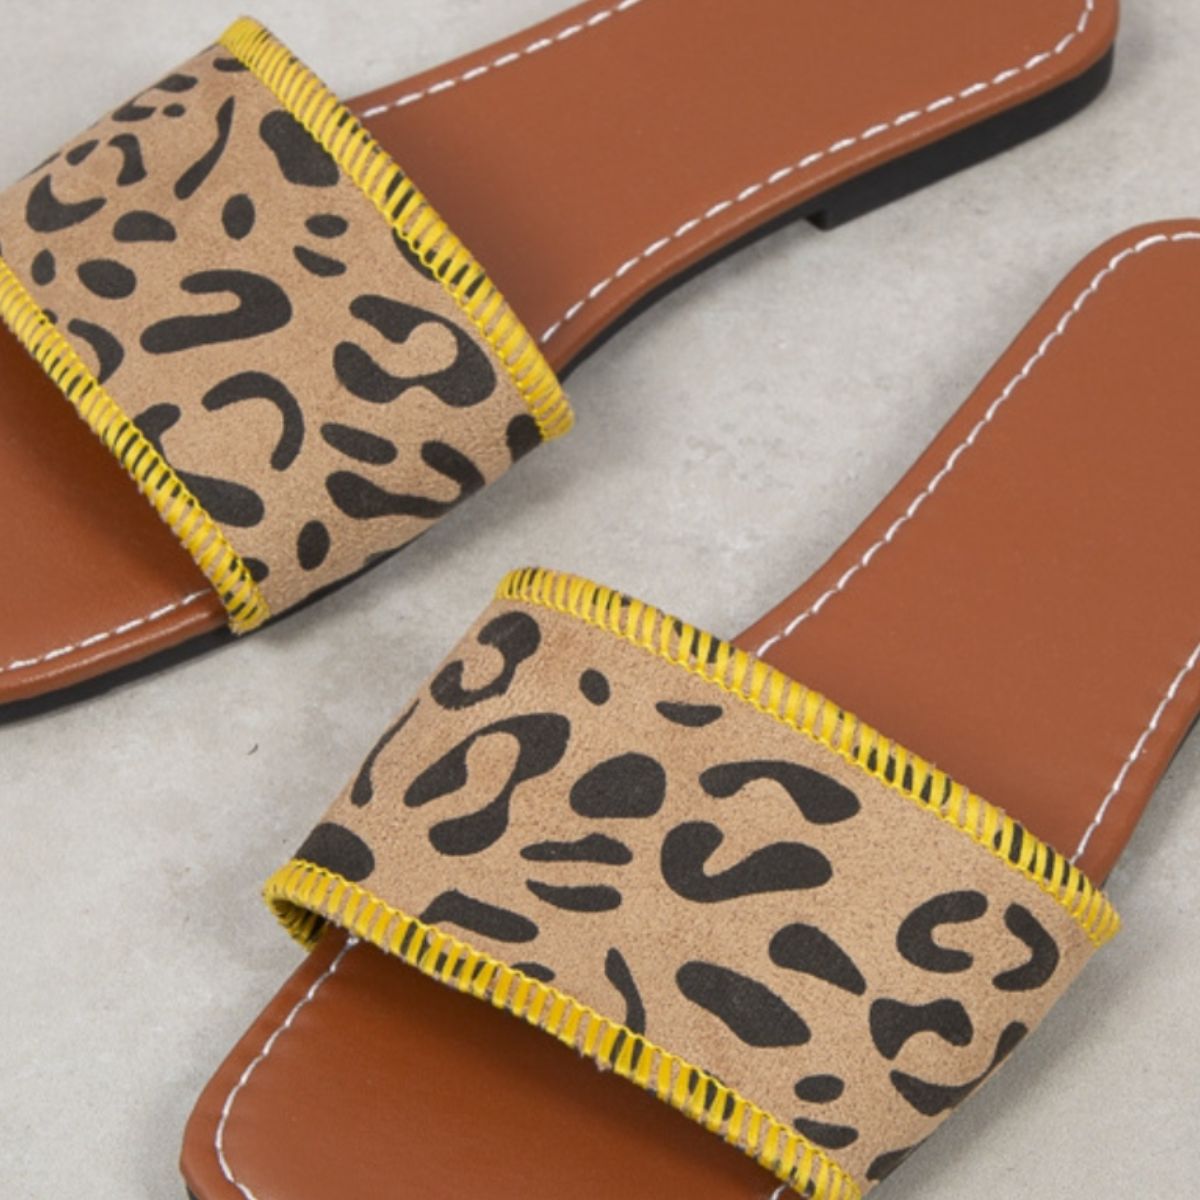 TEEK - Leopard PU Leather Flat Sandals SHOES TEEK Trend   